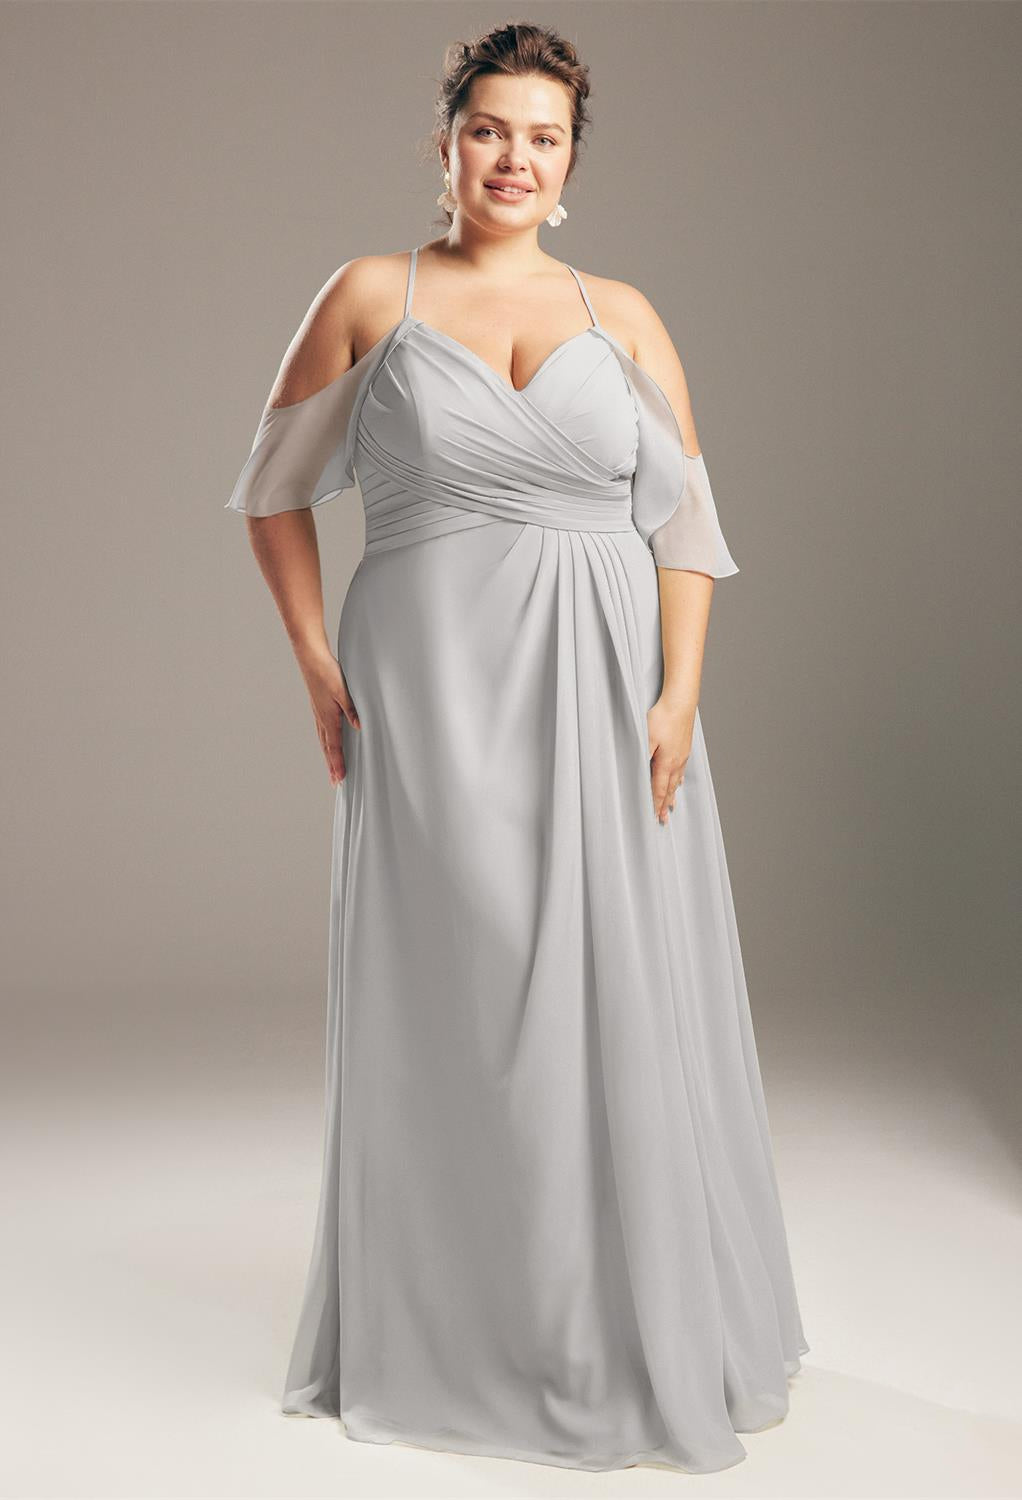 A plus size bridesmaid in a Jenifer - Chiffon Bridesmaid Dress - Off the Rack by Bergamot Bridal.